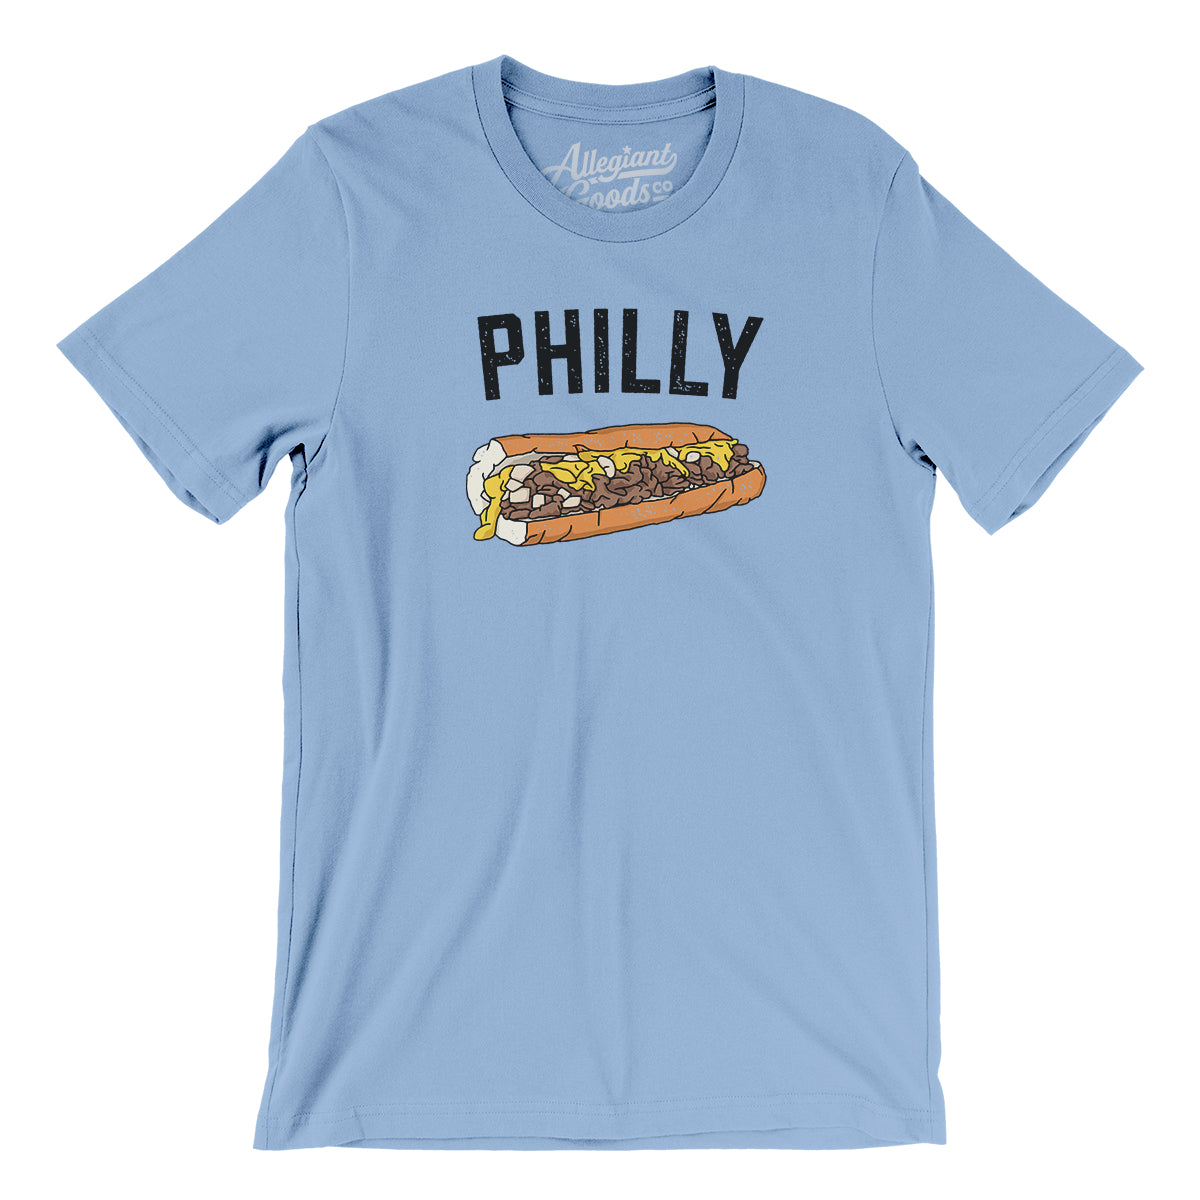 DIRTYRAGZ Mens Ill Vintage Phillies Shirt - Philadelphia Shirts Apparel AKA Beastie Boys Tee Graphic Tee